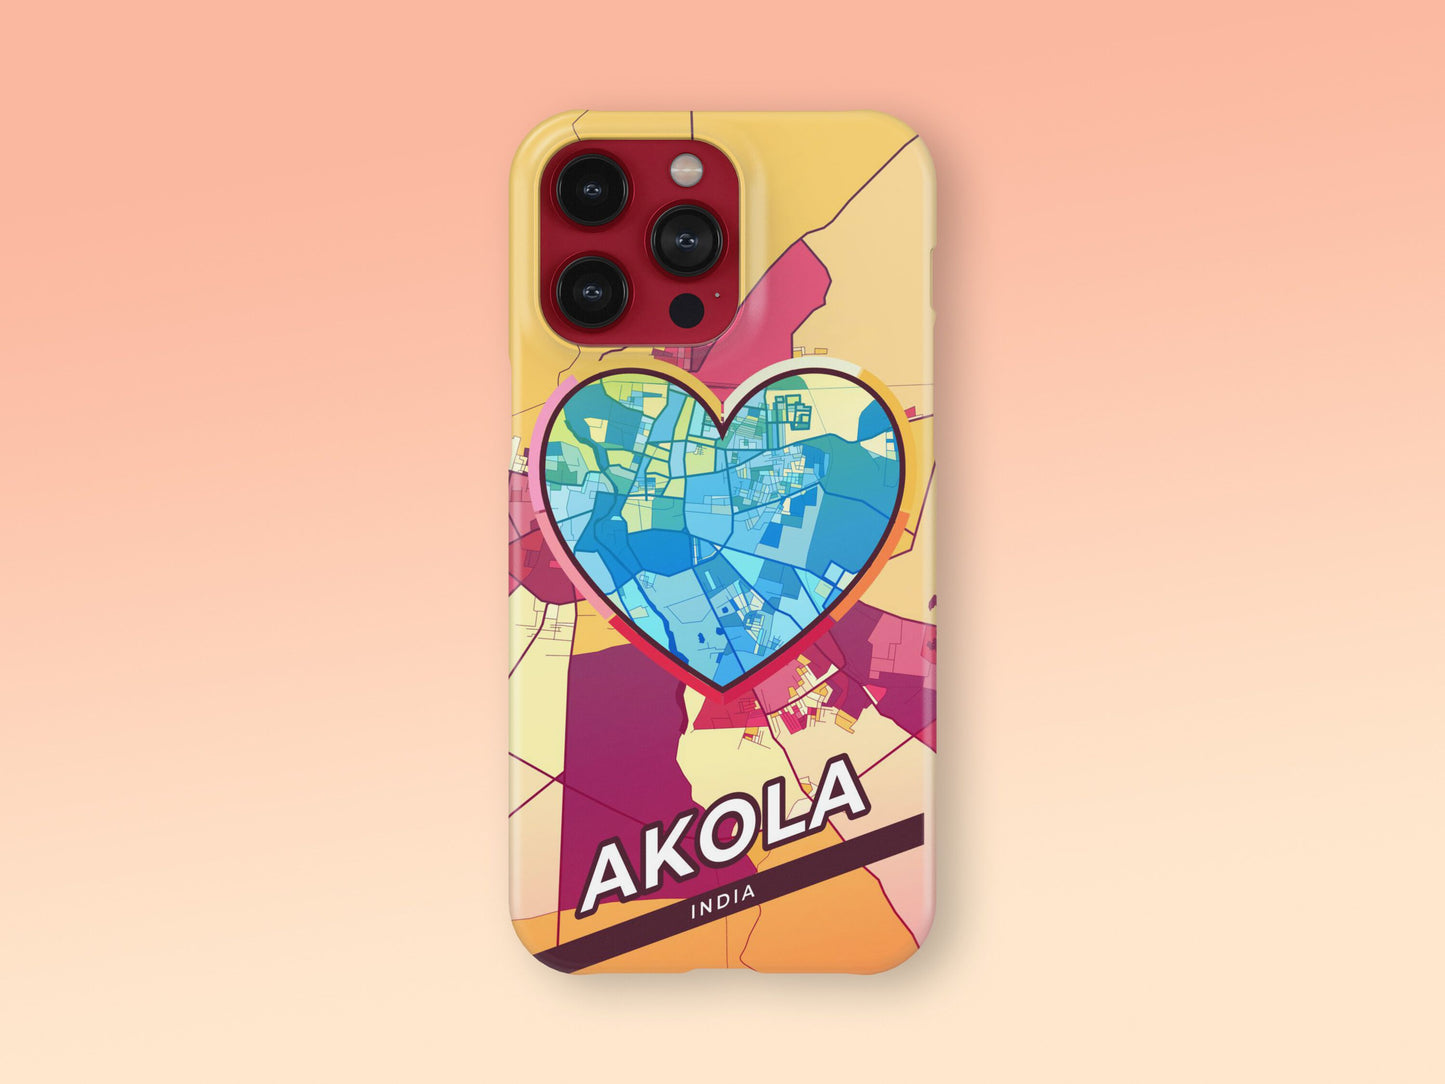 Akola India slim phone case with colorful icon. Birthday, wedding or housewarming gift. Couple match cases. 2